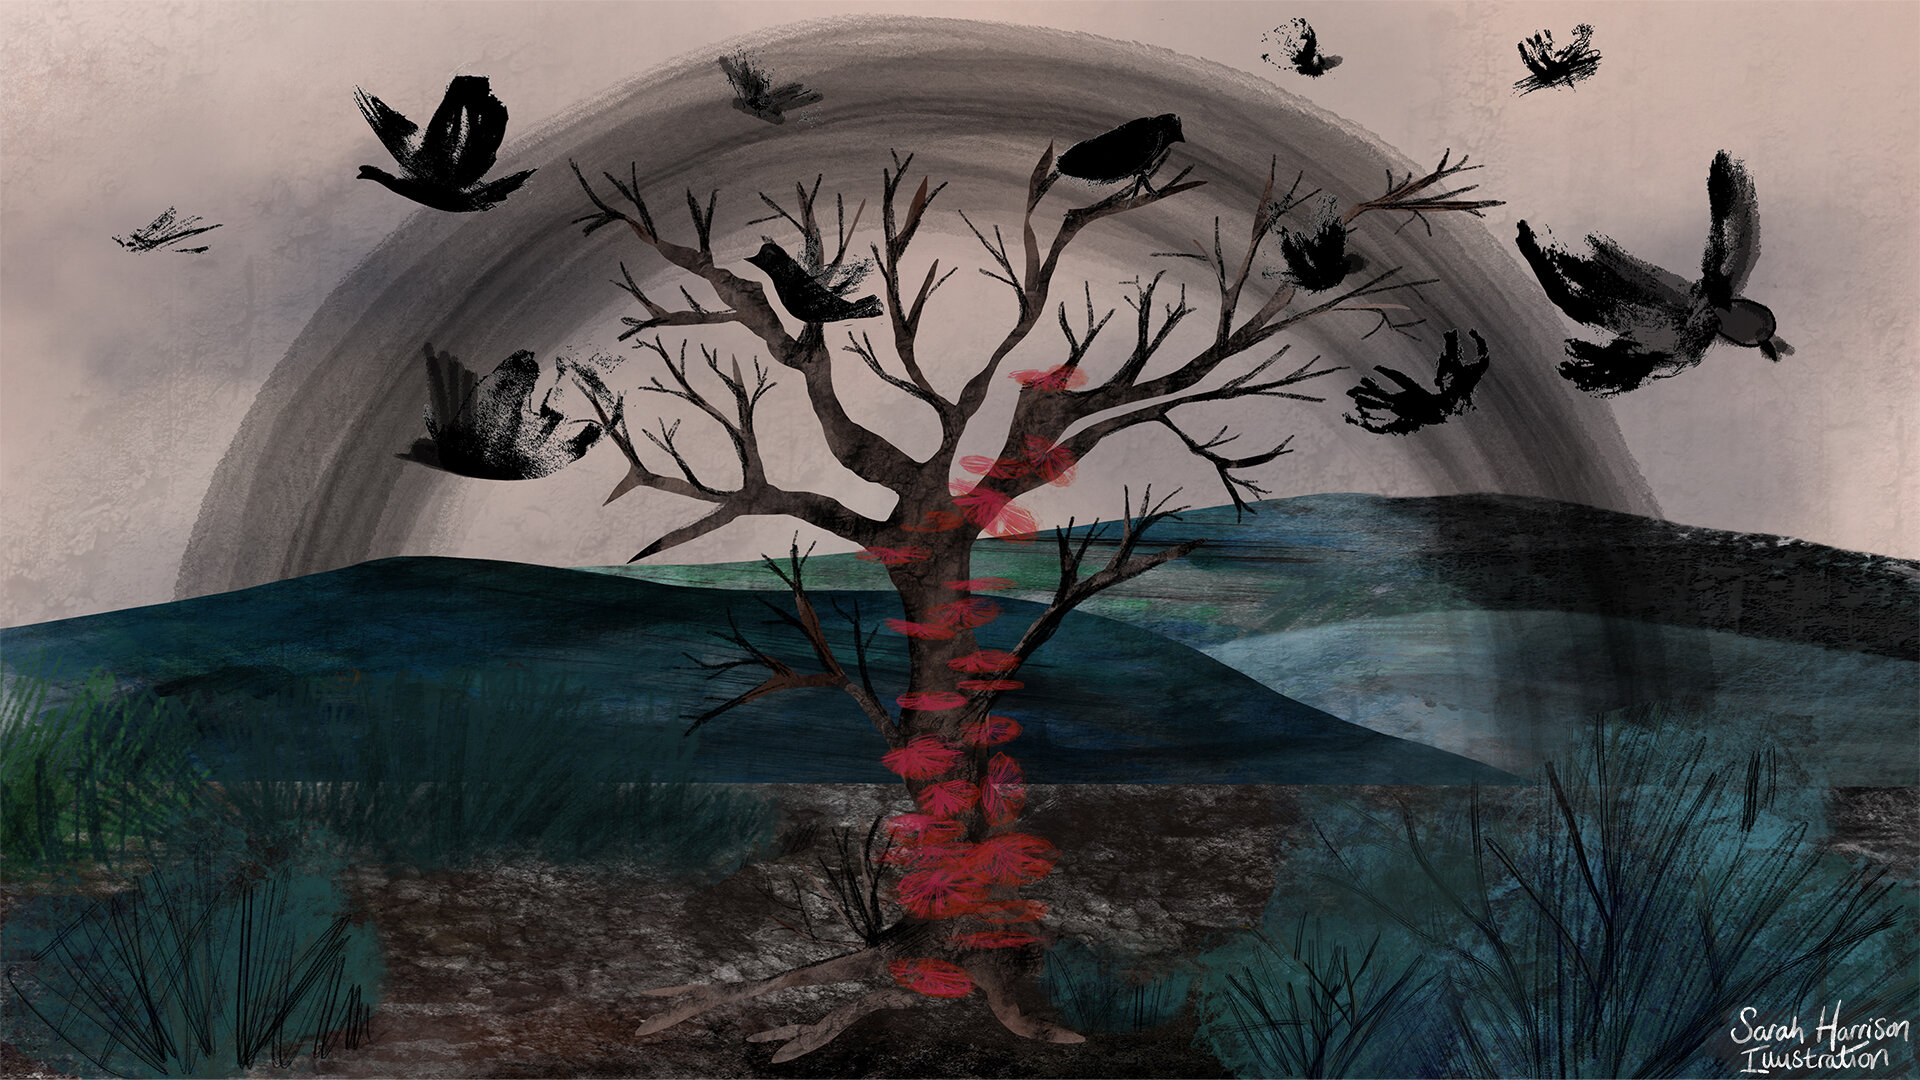 Black Rainbow - The Skeletal Tree with birds (Web).jpg